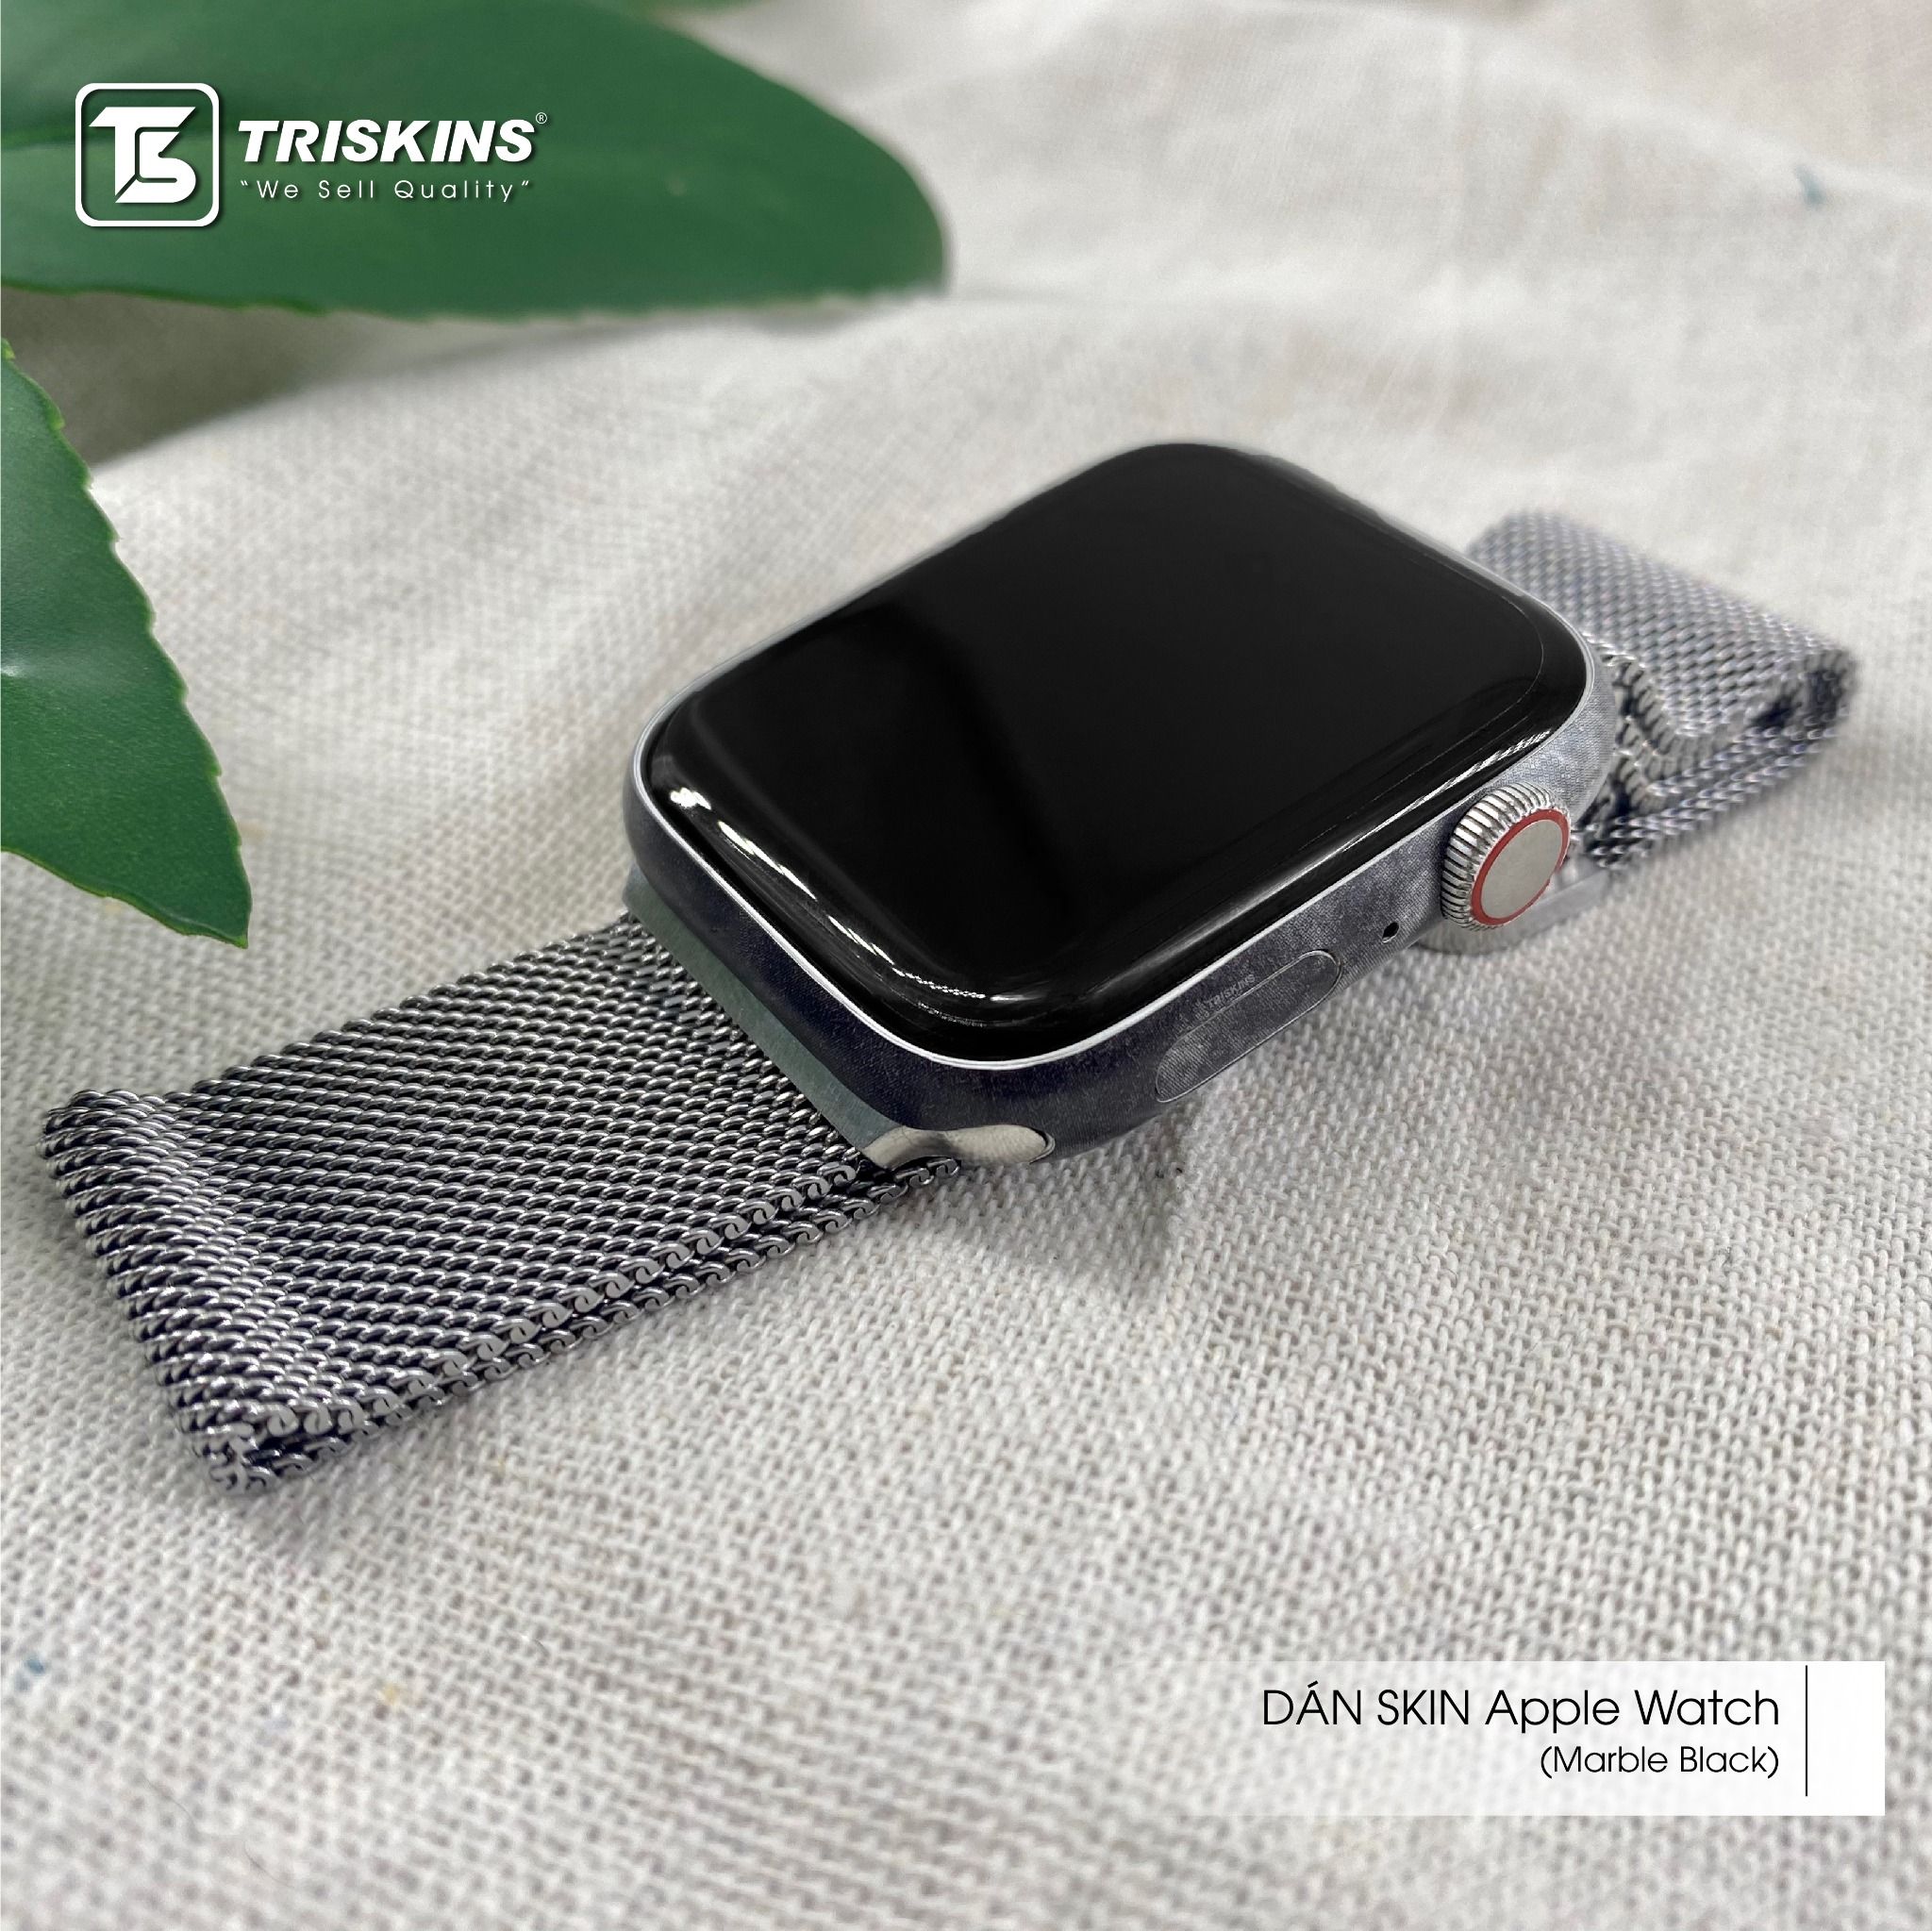  Skin 3M Apple Watch | Marbel Black 